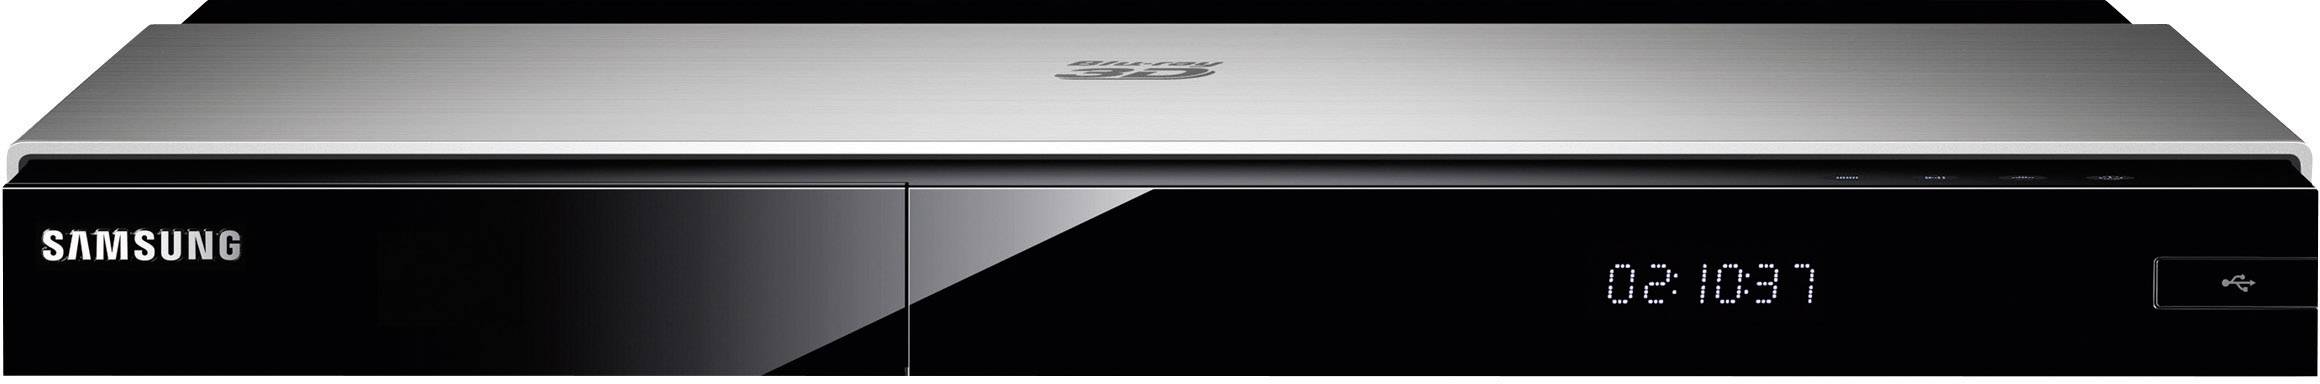 Samsung Bd F7500 3d Blu Ray Player 4k Ultra Hd Upscaling Smart Tv